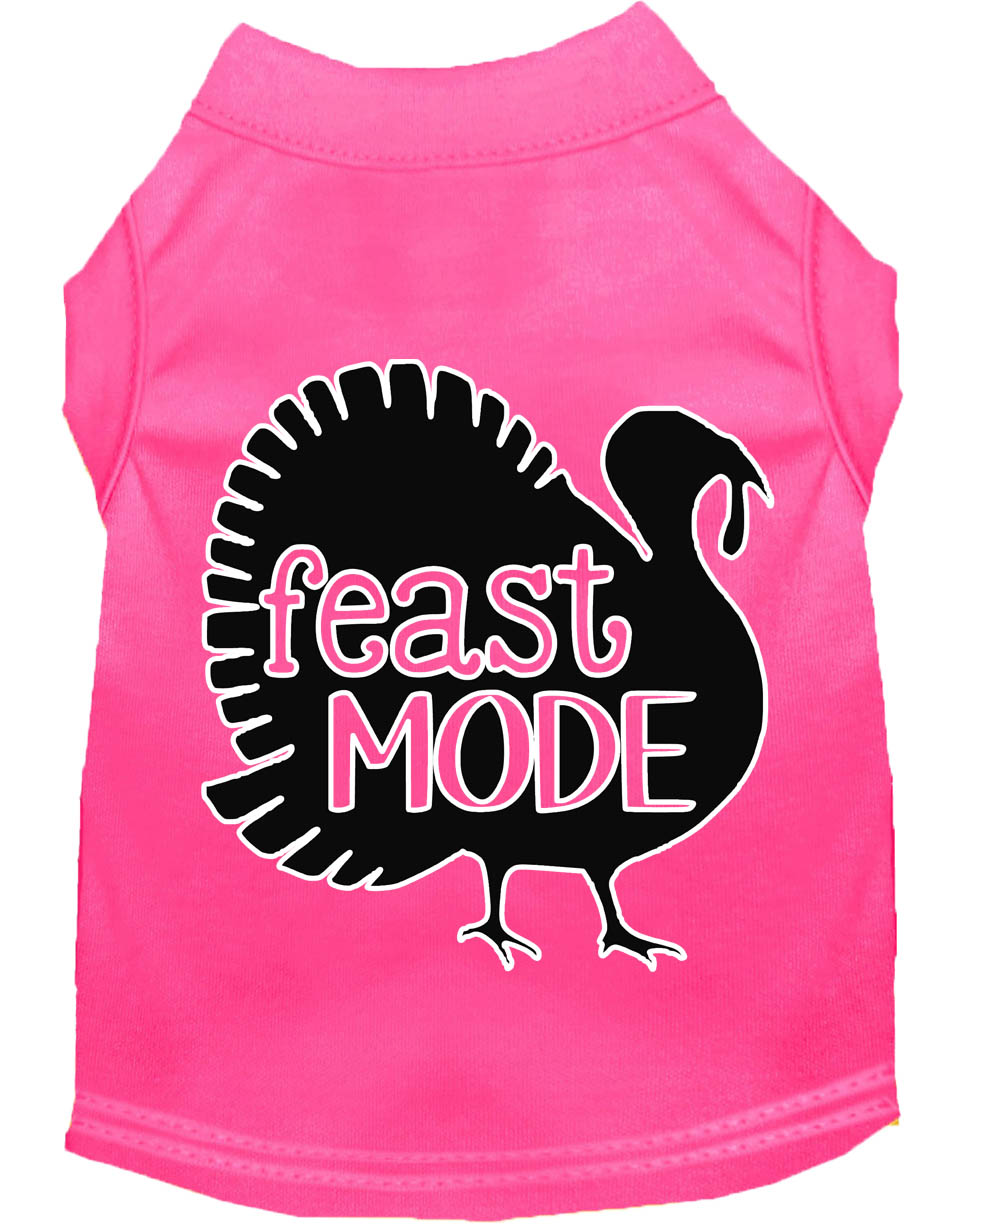 Feast Mode Screen Print Dog Shirt Bright Pink XS